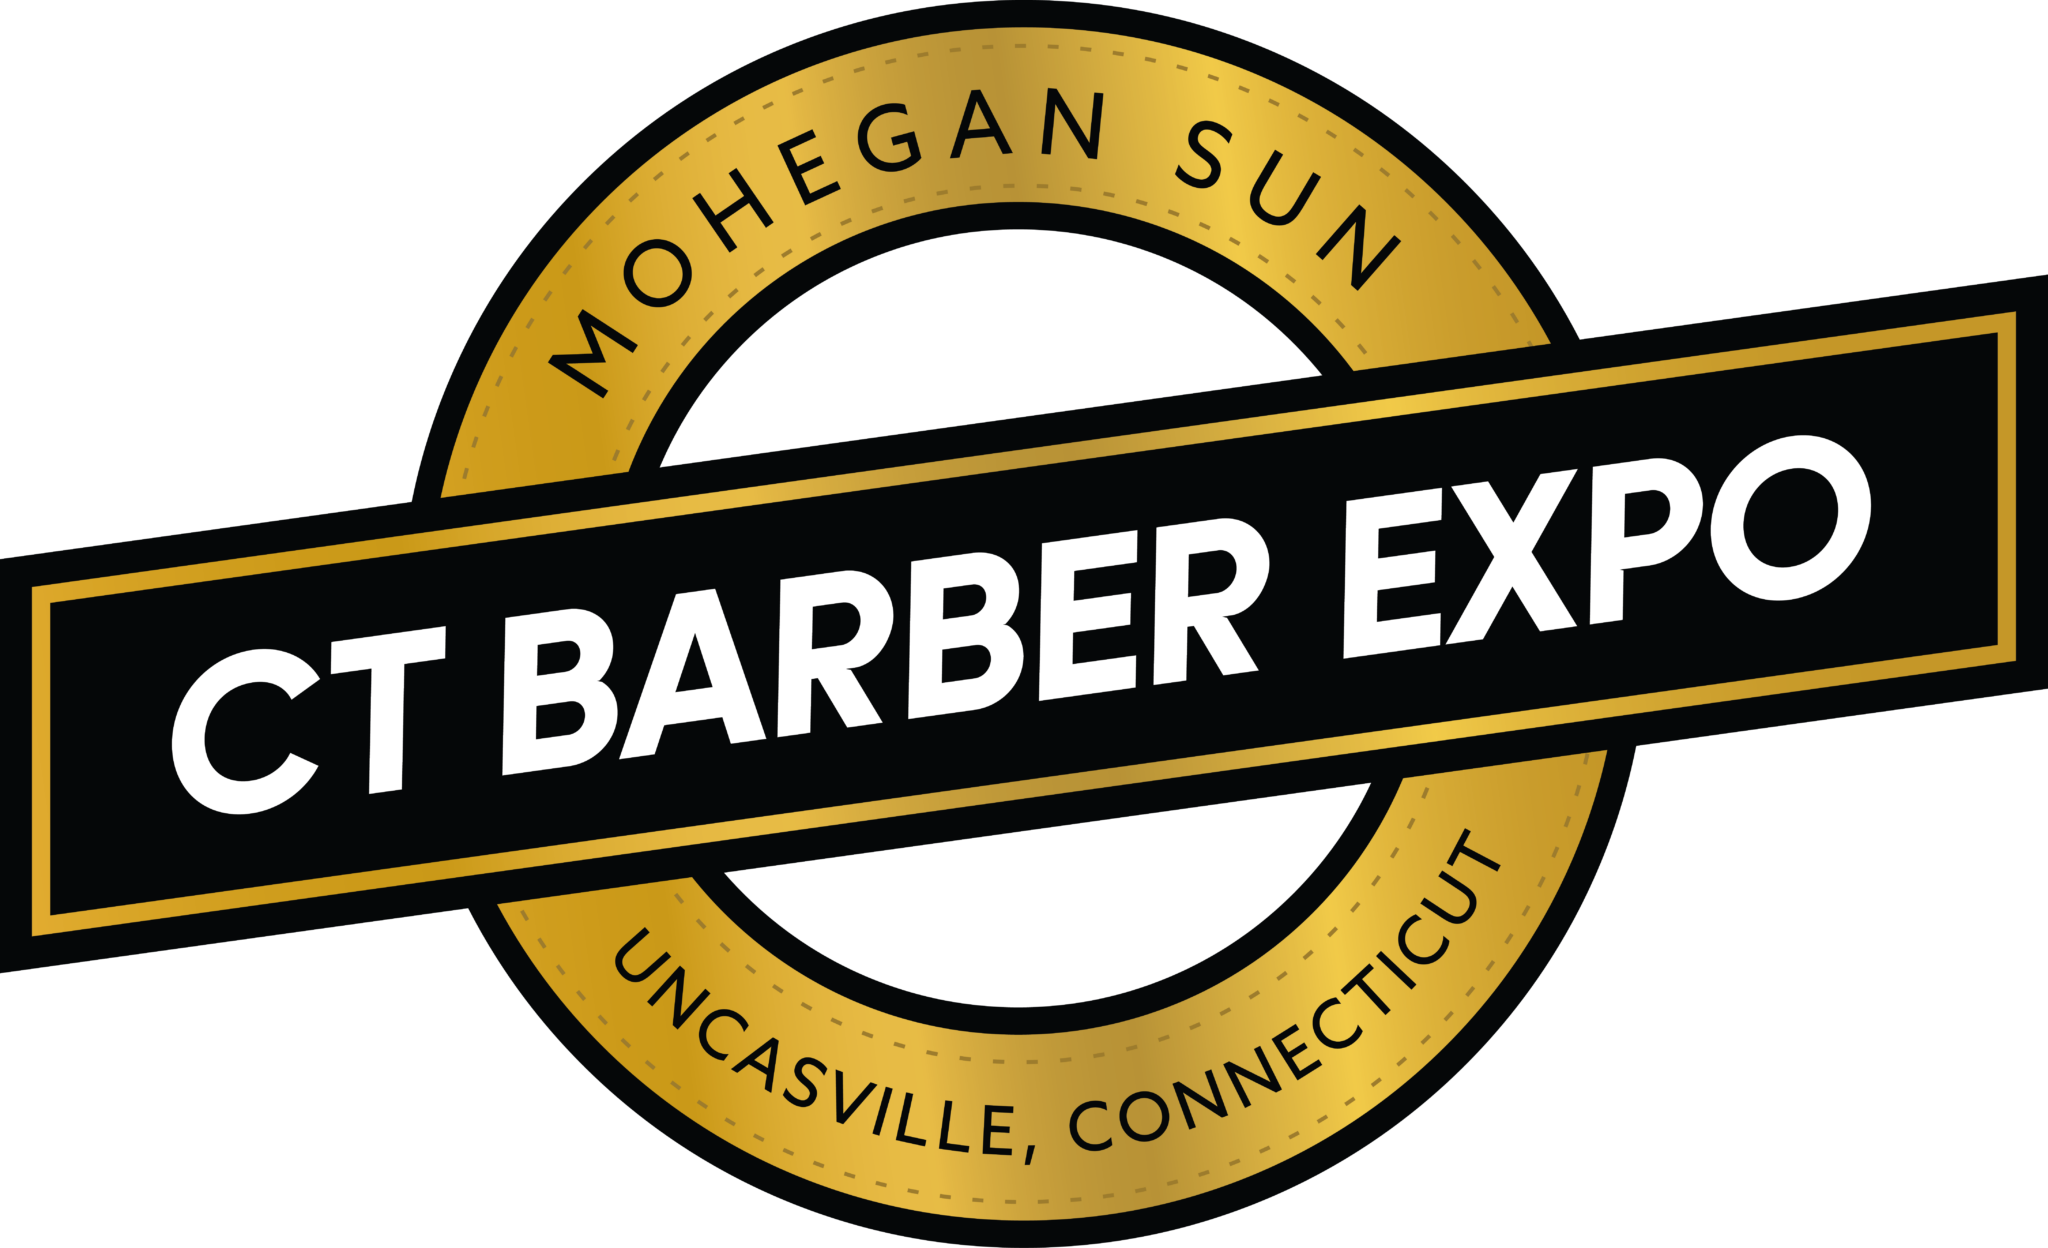 CT Barber Expo May 46 2024 Mohegan Sun Casino